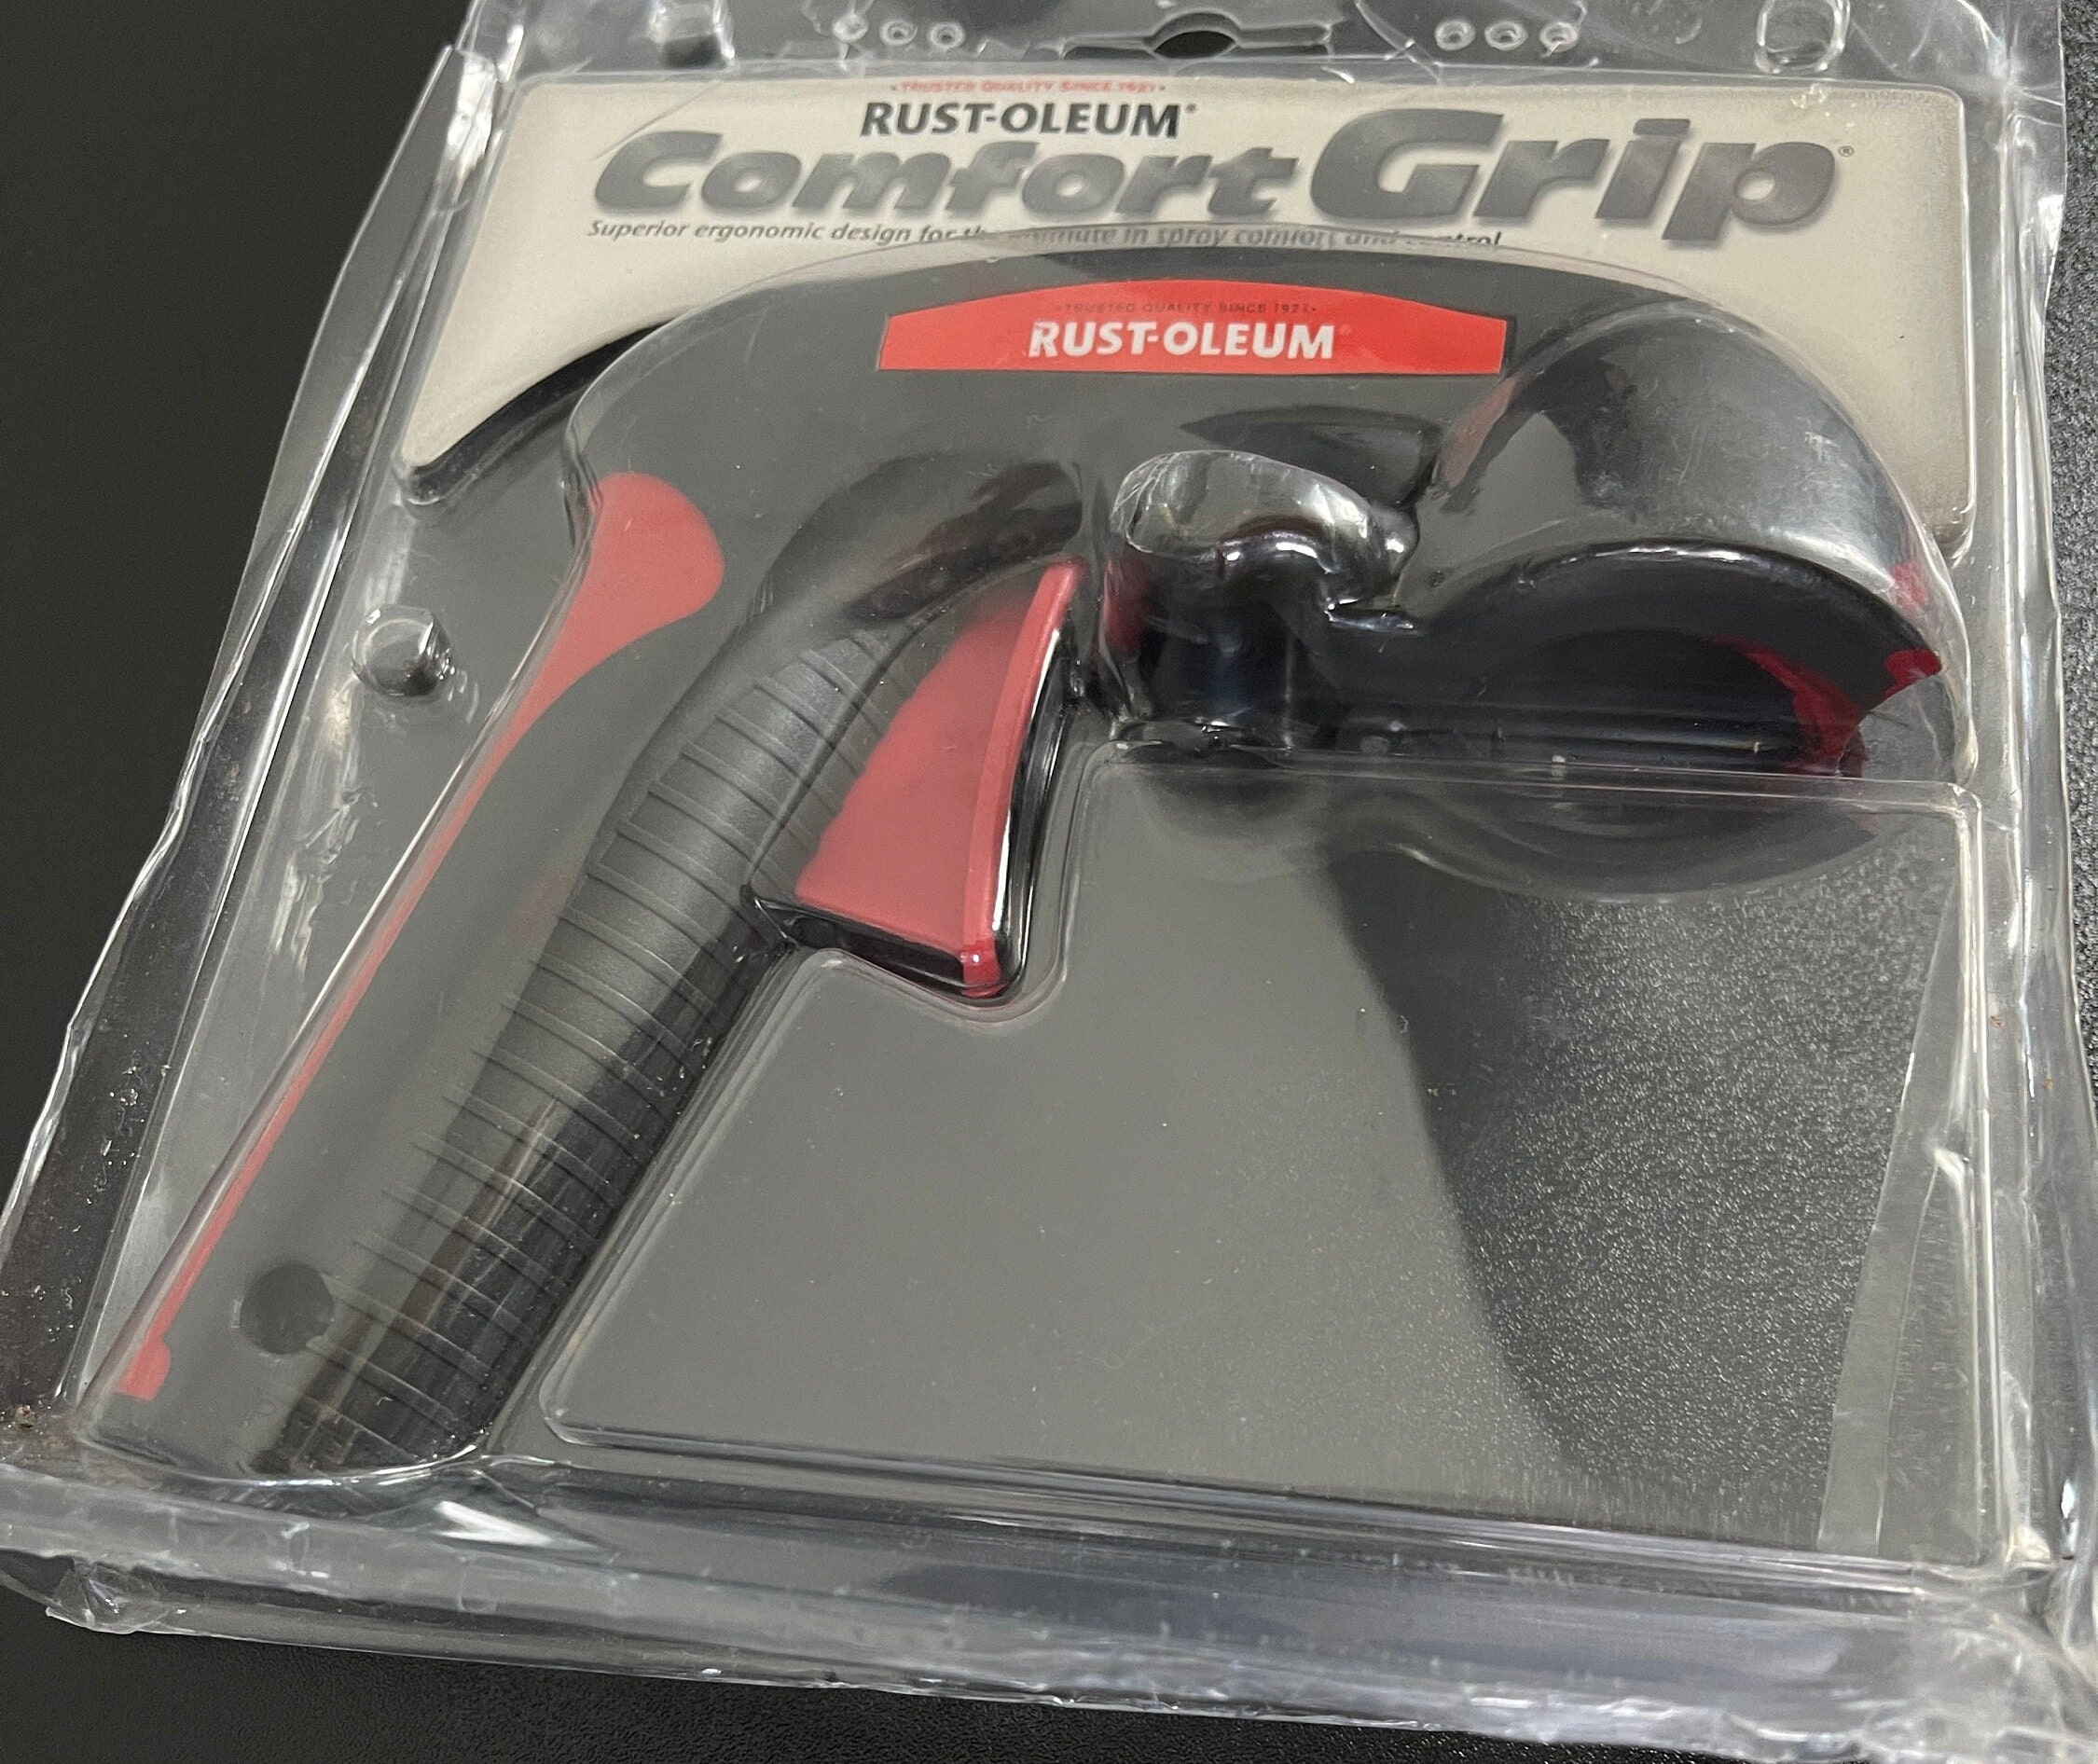 High Performance Comfort Spray Grip Accessory